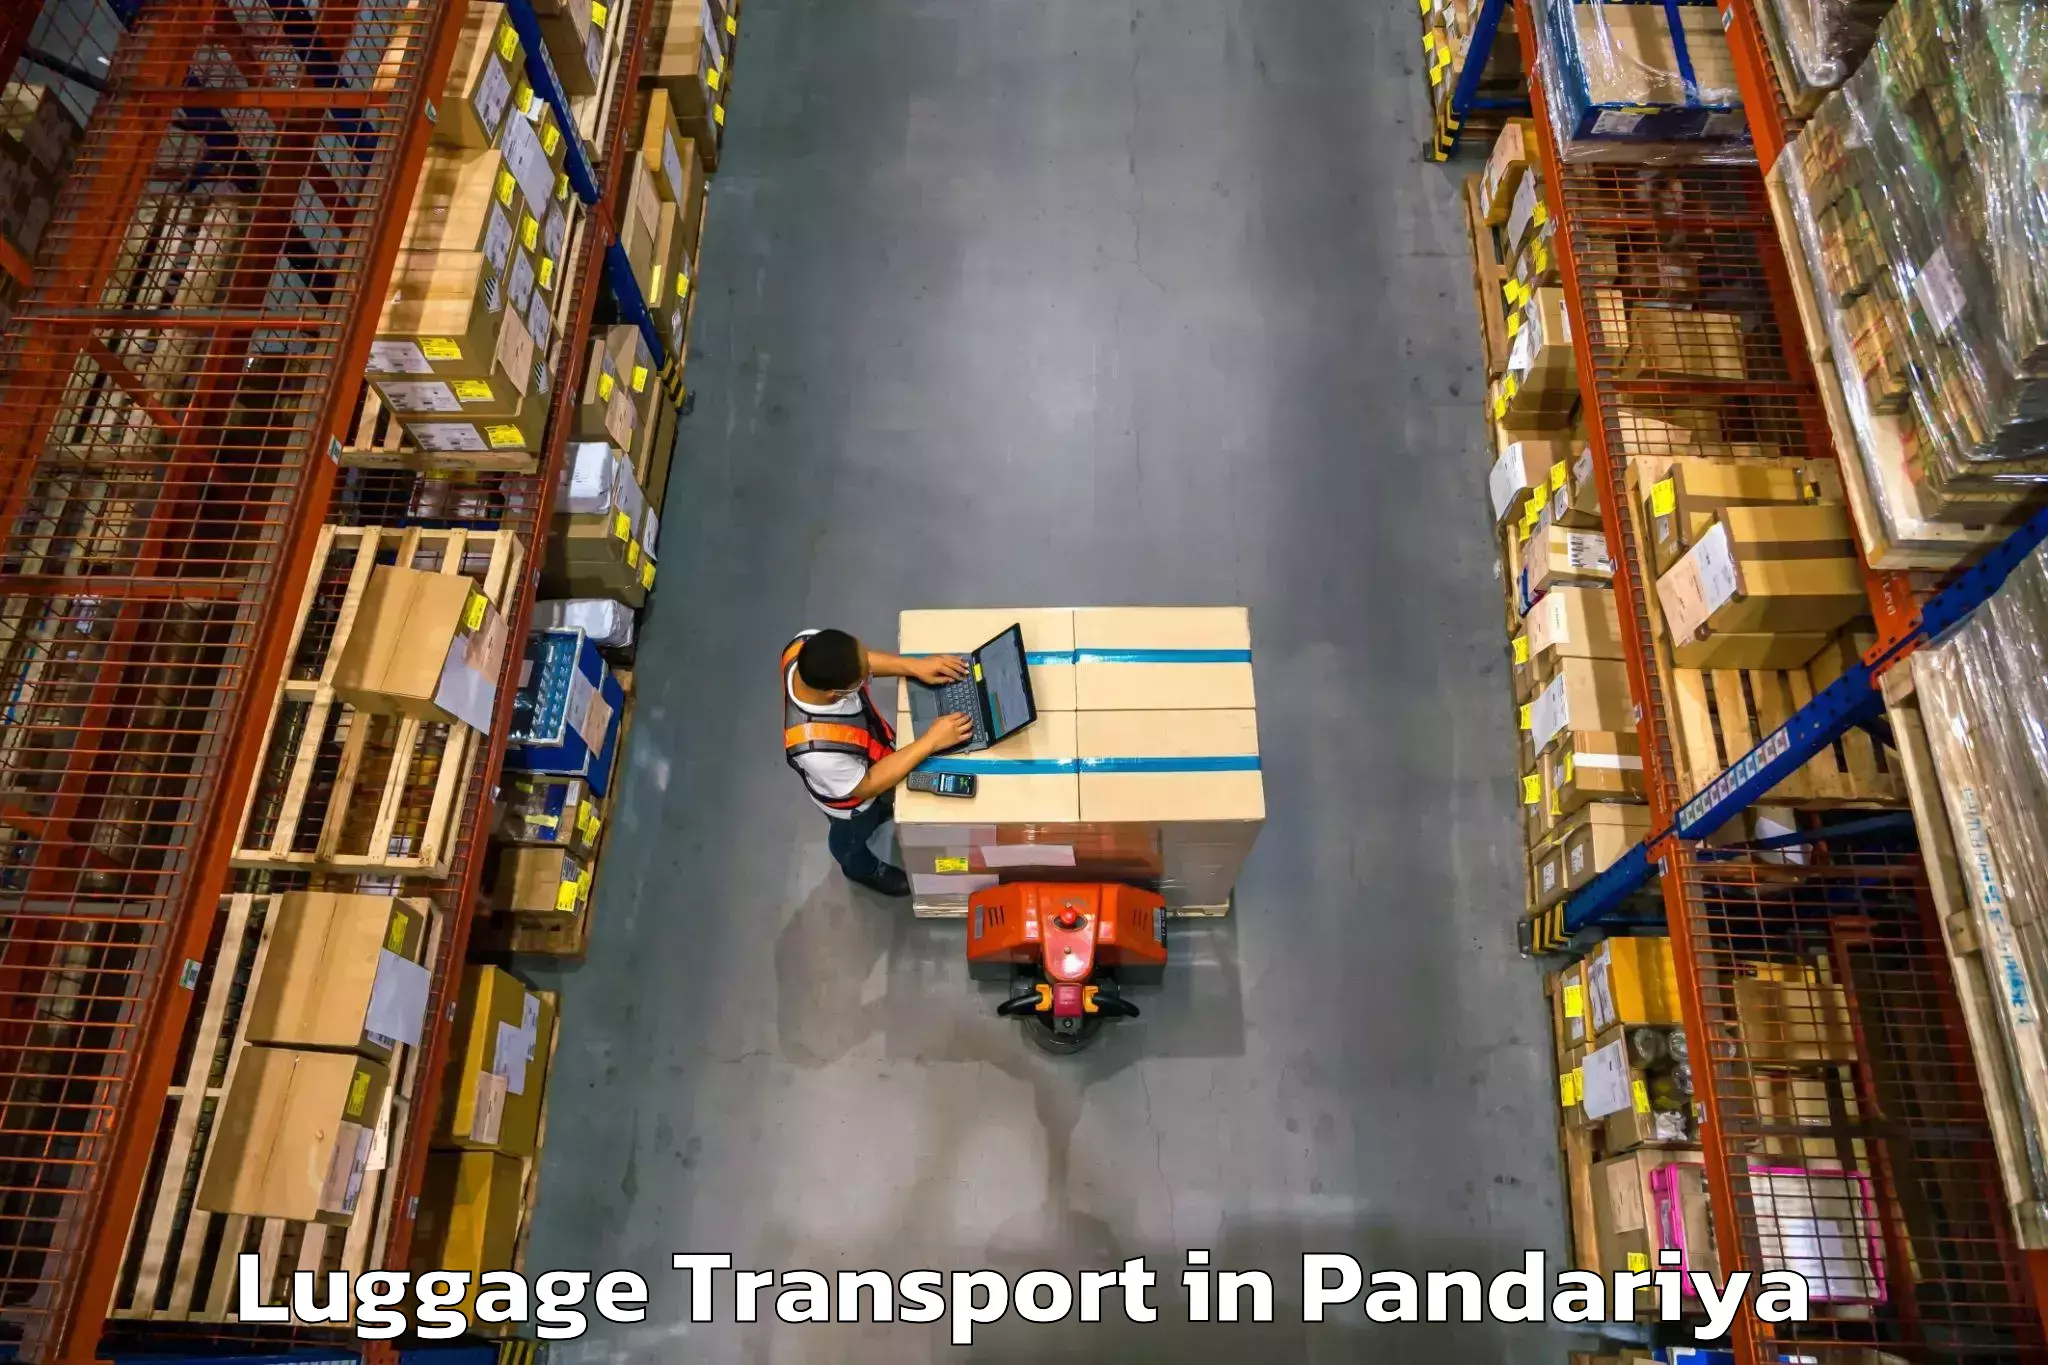 Luggage transfer service in Pandariya